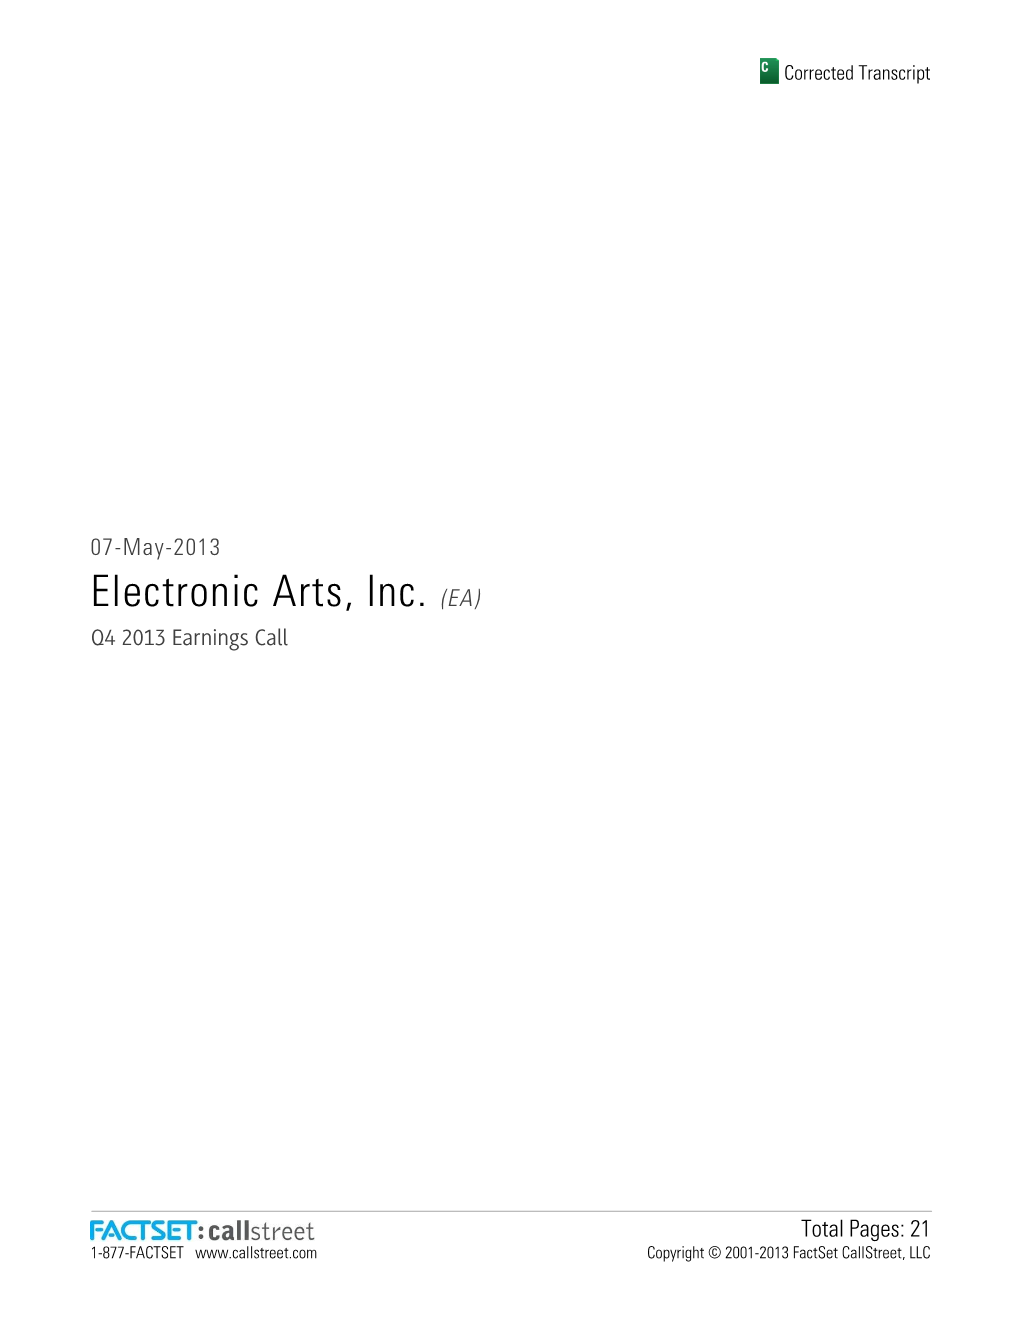 Electronic Arts, Inc. (EA) Q4 2013 Earnings Call